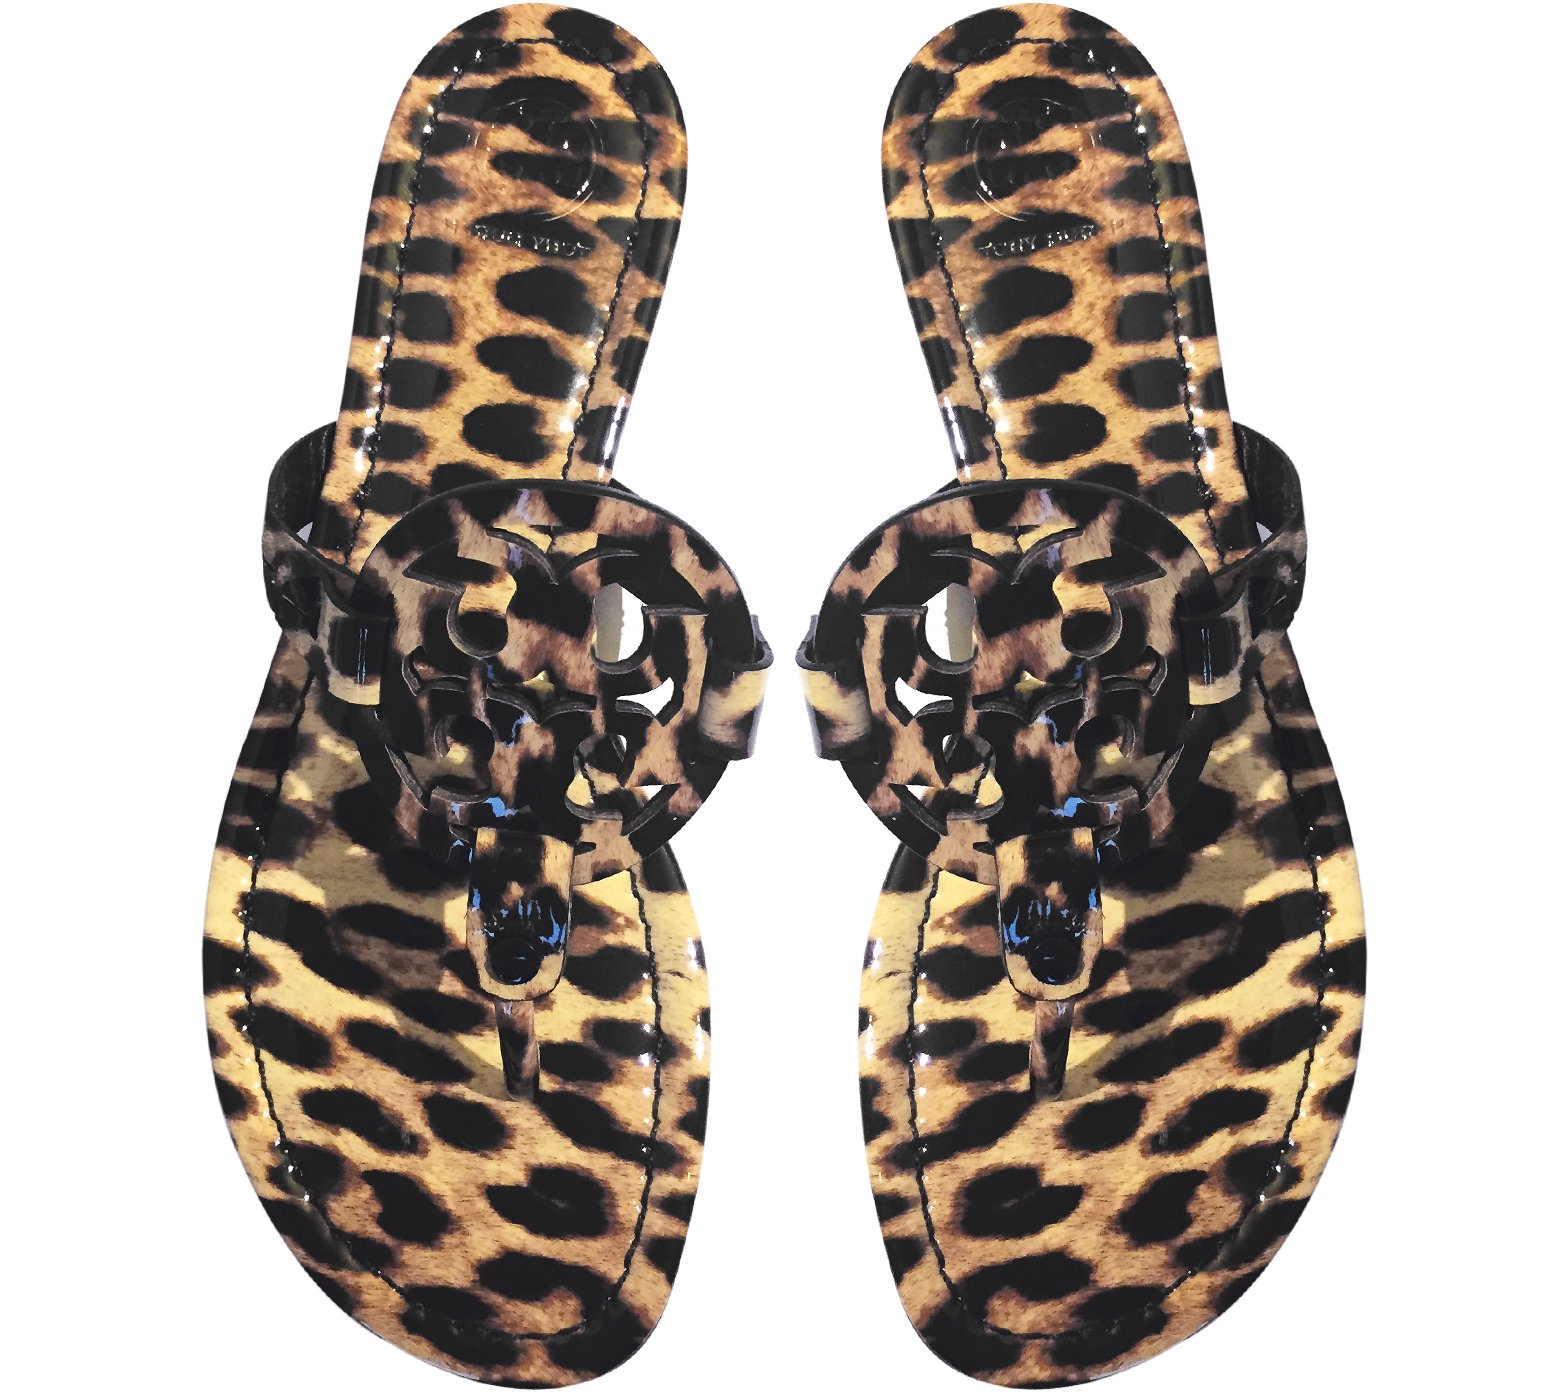 leopard print tory burch sandals